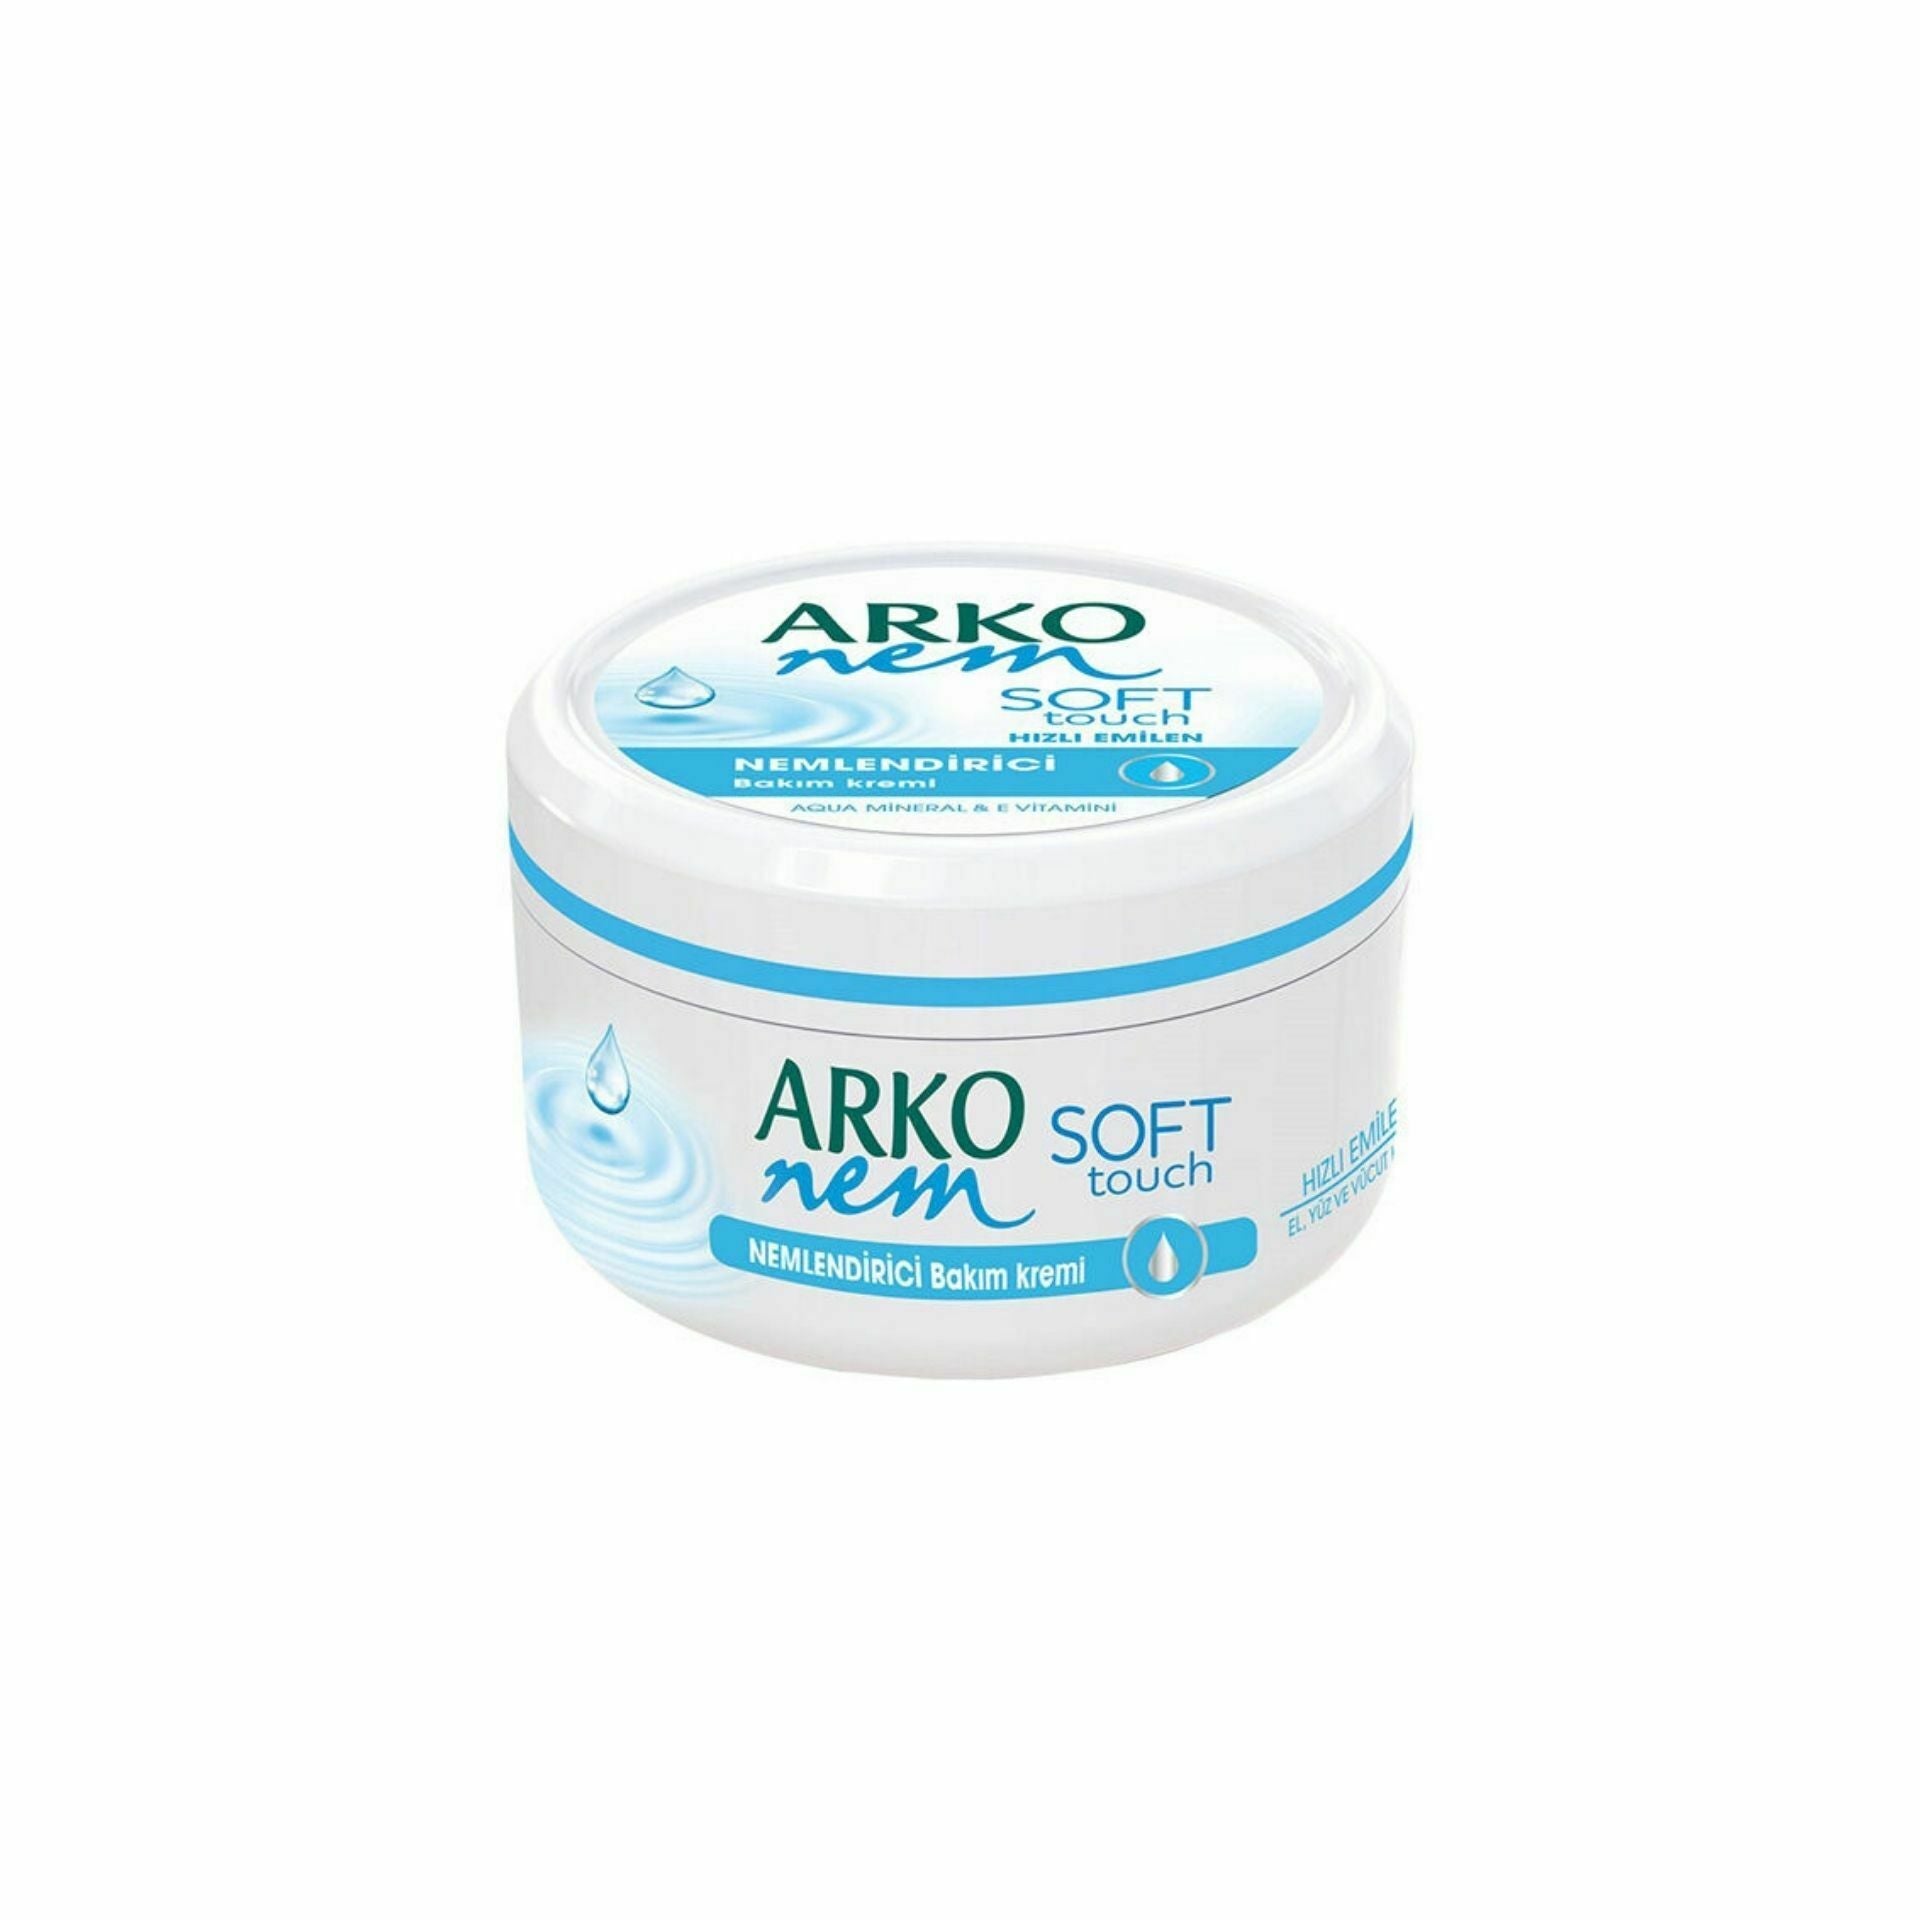 Arko Nem Cream Soft Touch (300ml) - Aytac Foods